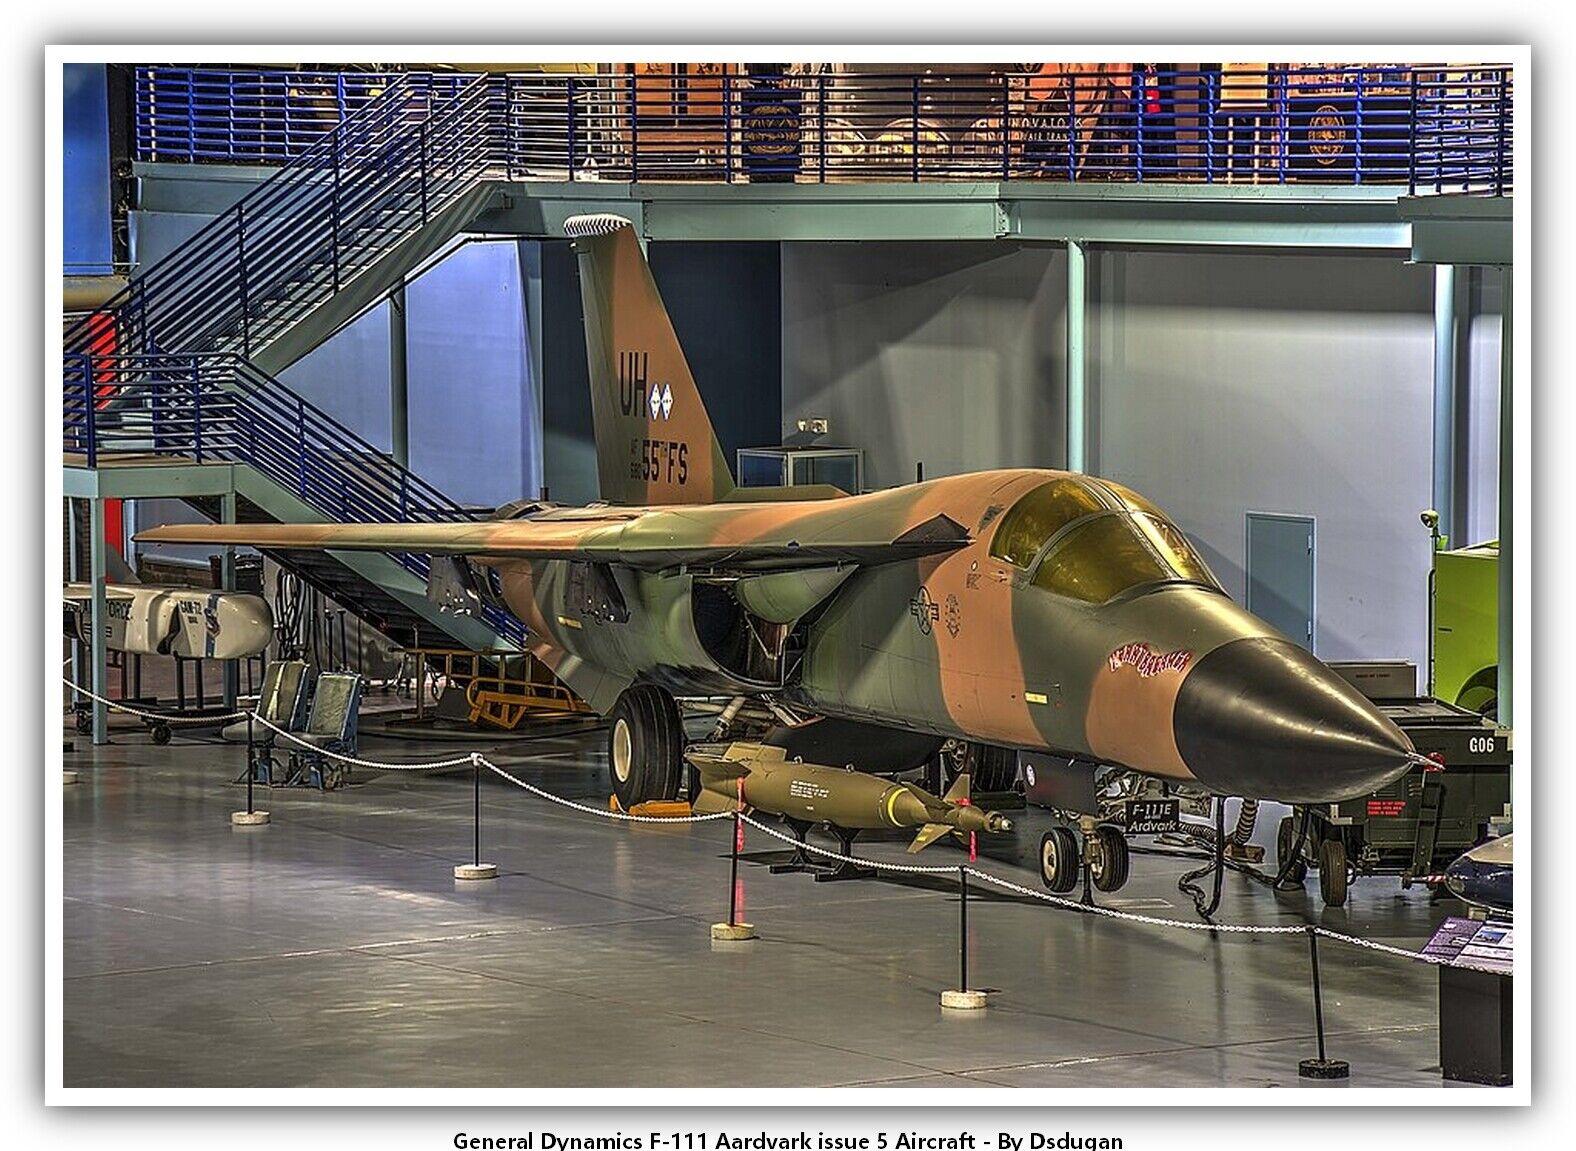 General Dynamics F-111 Aardvark issue 5 Aircraft